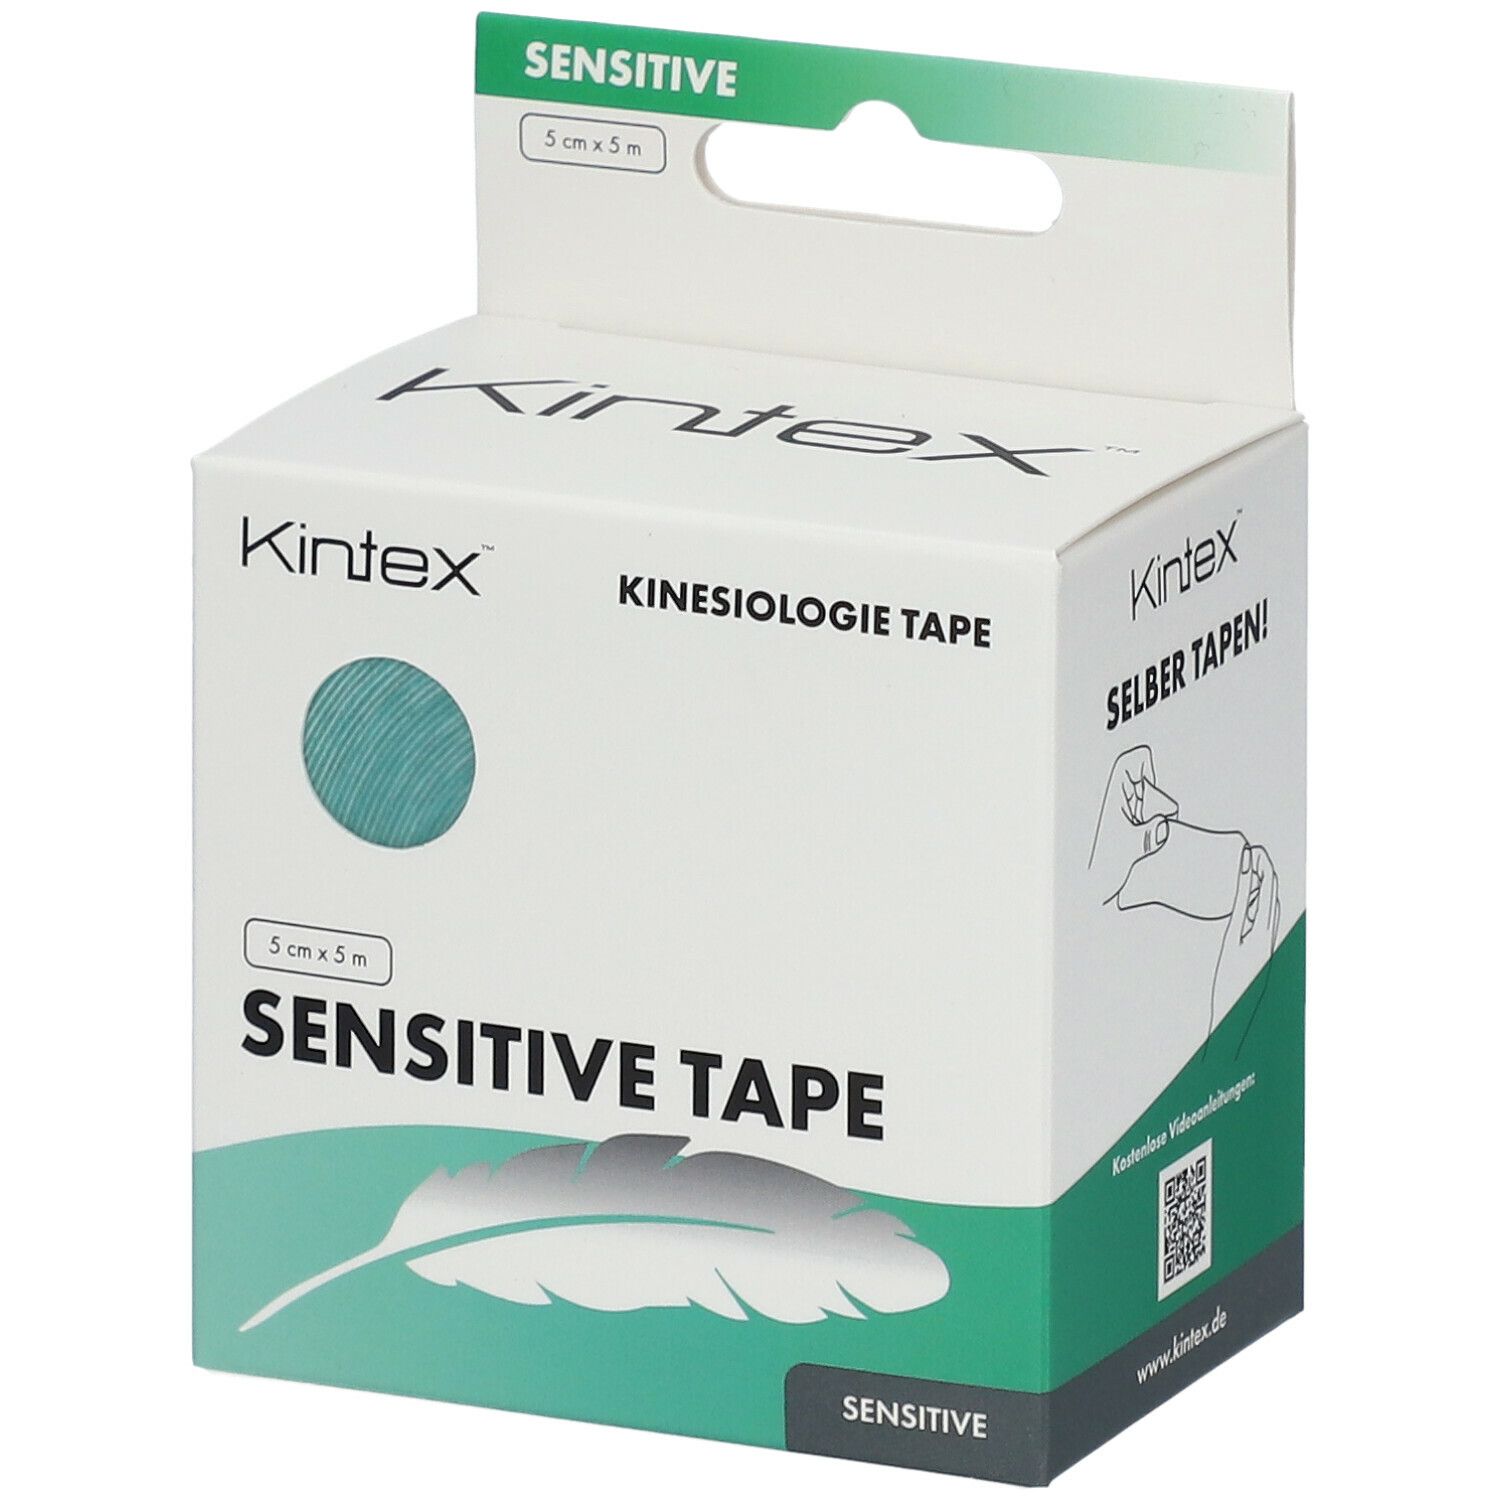 Kintex™ Kinesiology Tape Sensitive APOTHEKE x SHOP 1 - 5 5 cm St